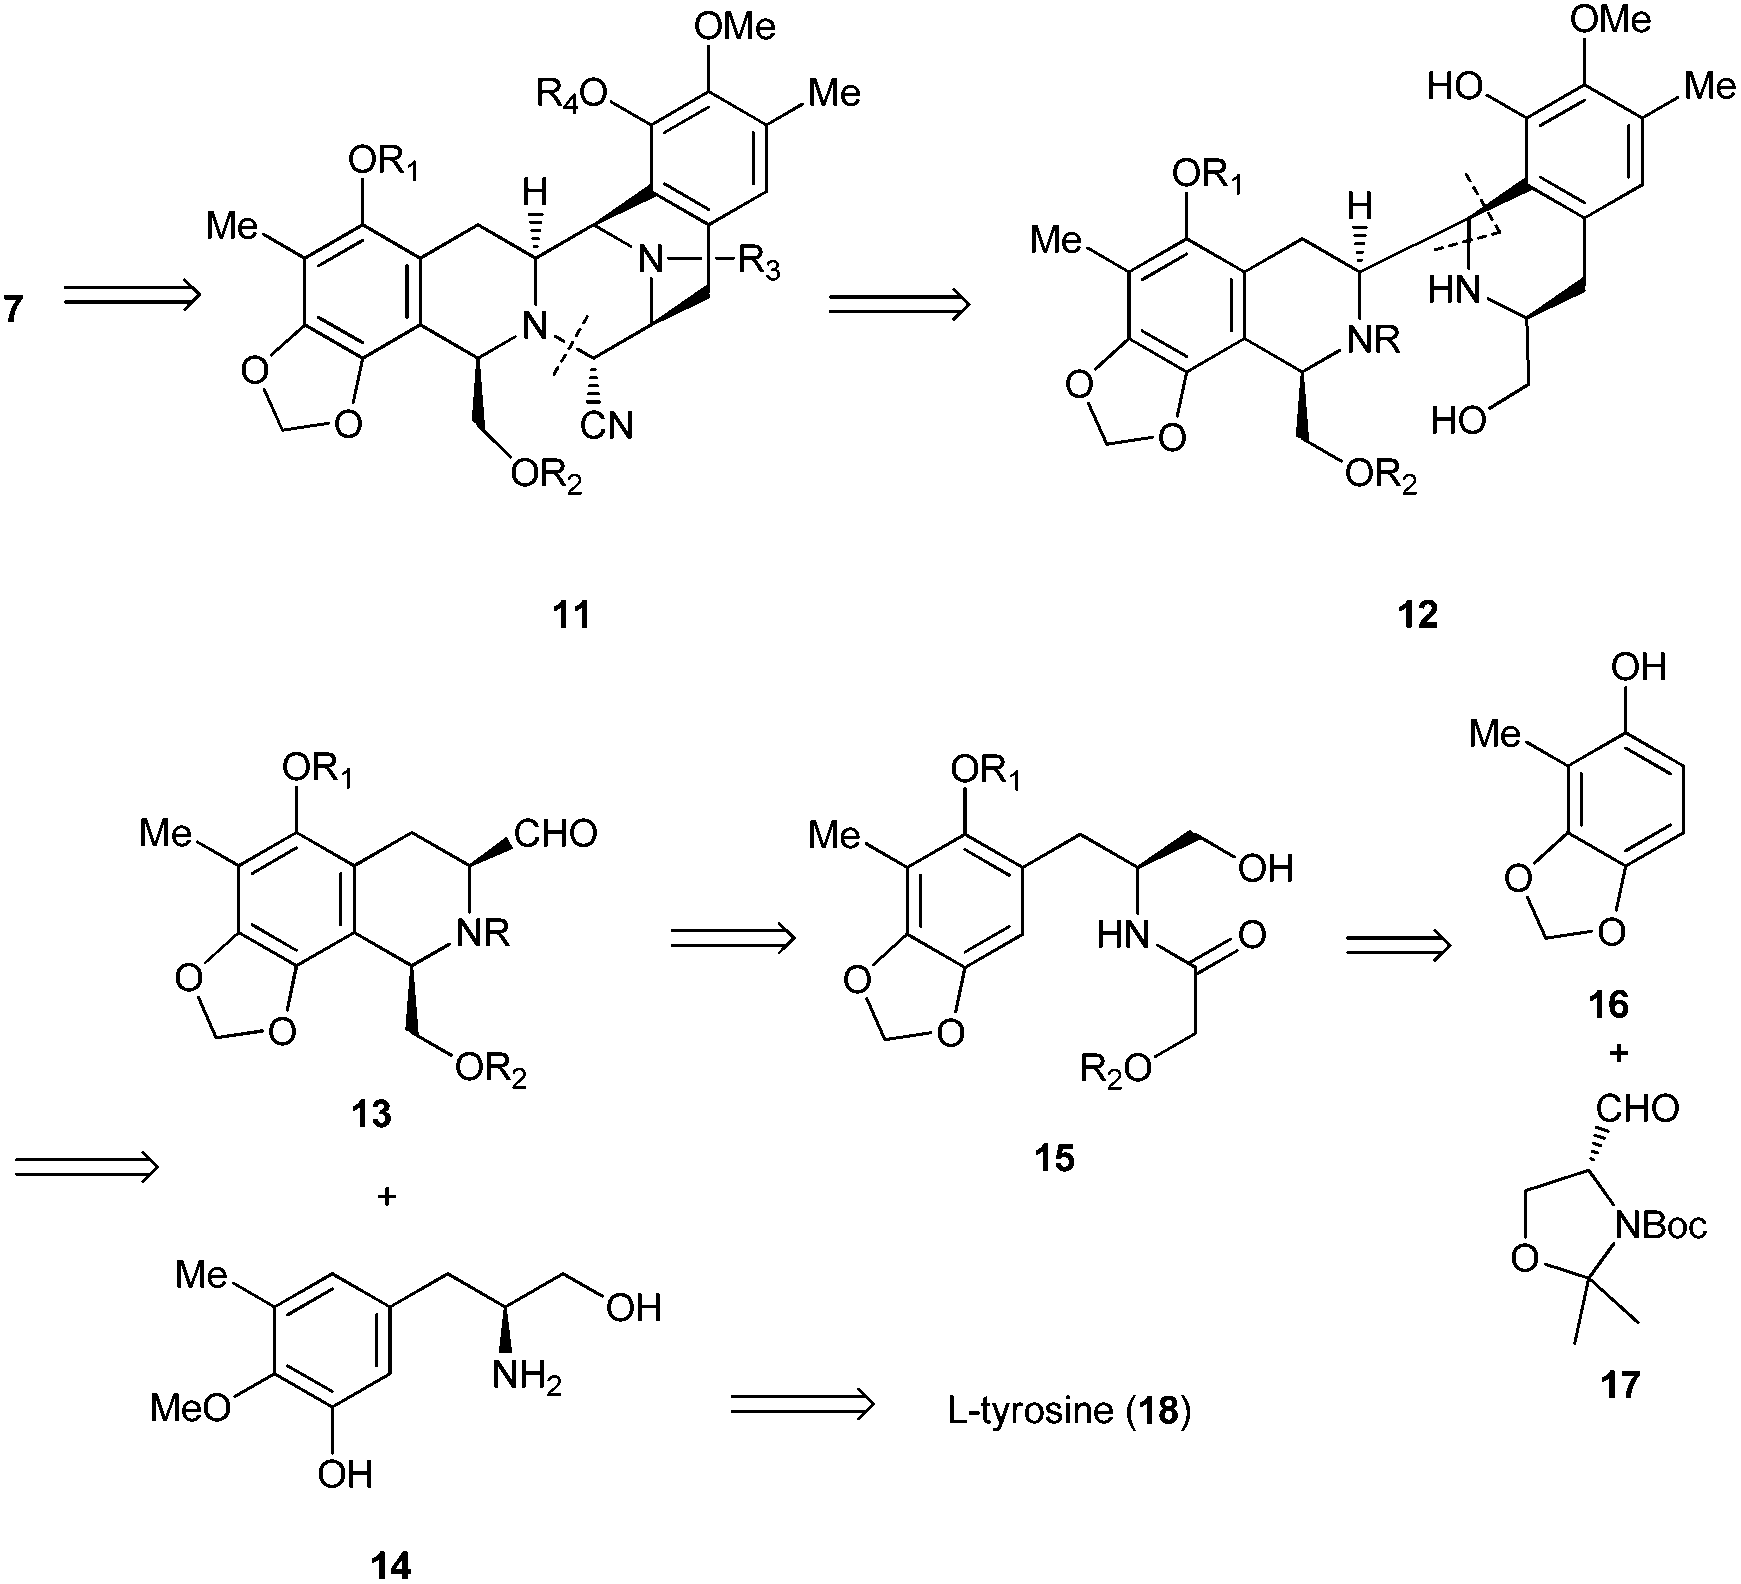 Synthesis of the Tetrahydroisoquinoline Alkaloid (±)-Renieramycin